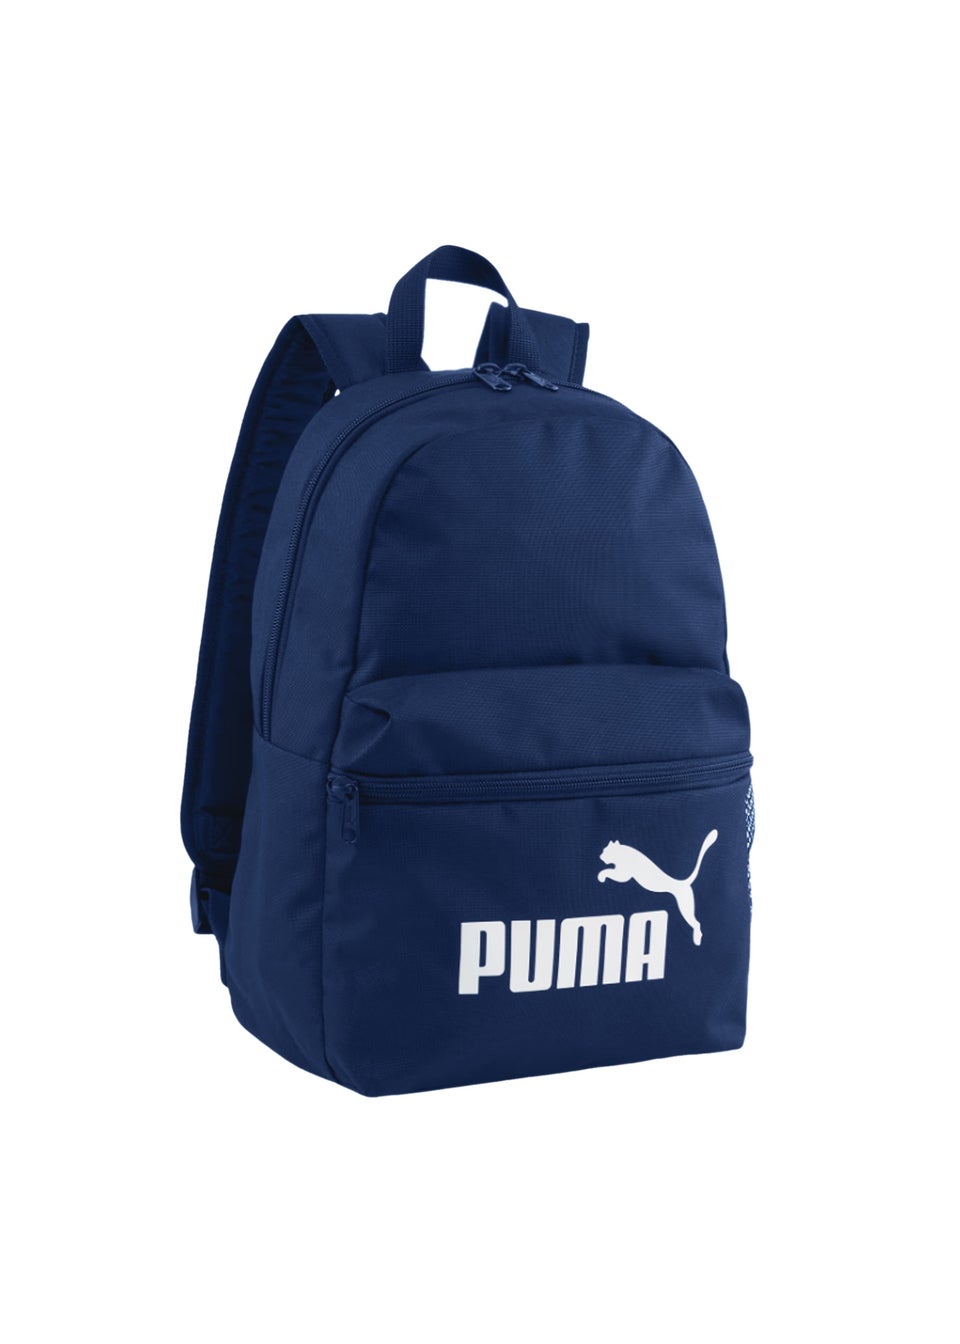 Puma Peacock Phase Backpack